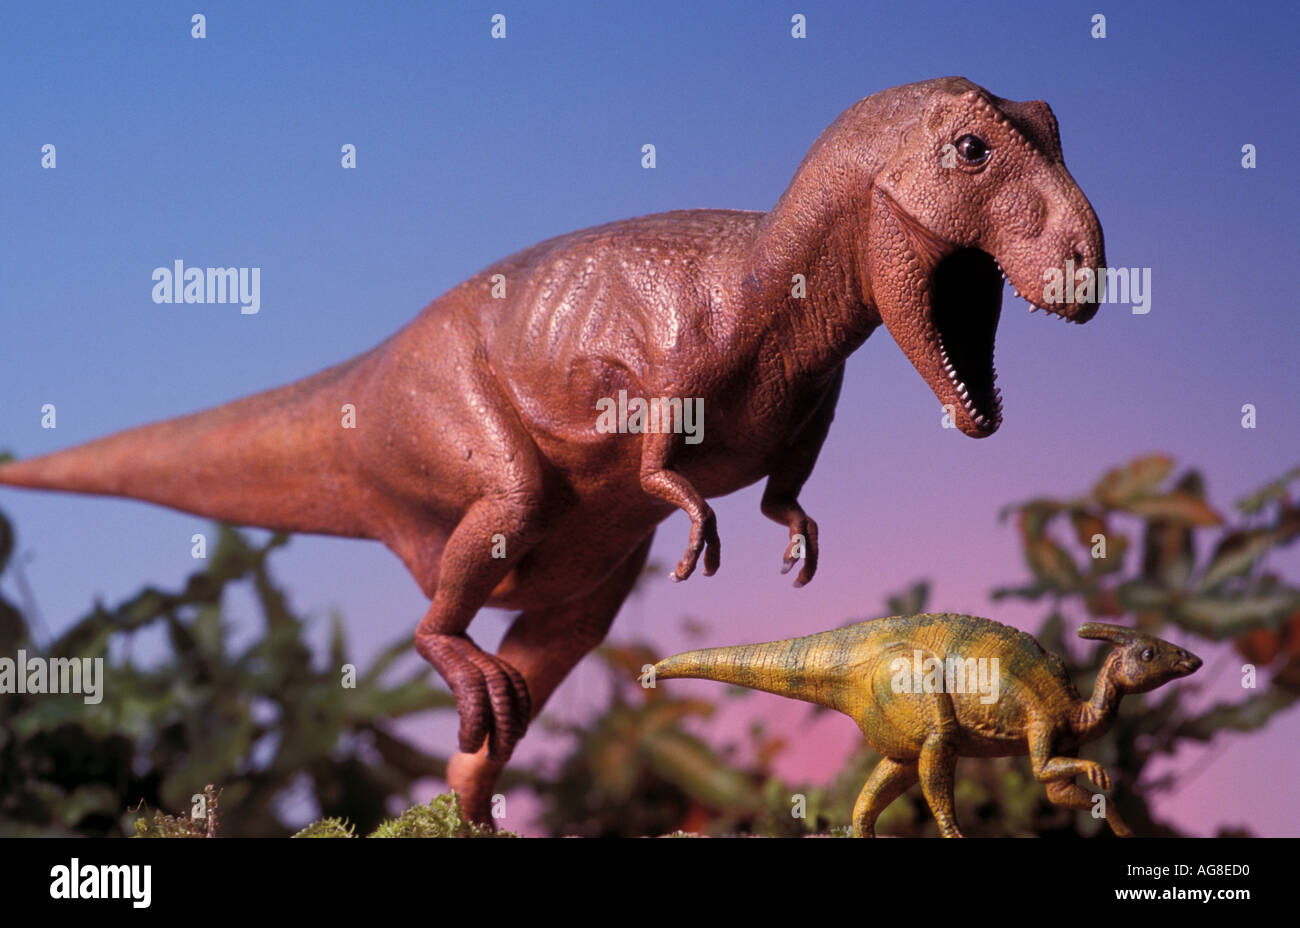 Tryannosaurus Rex Dinosaur feeding on smaller dinosaur Model Stock Photo